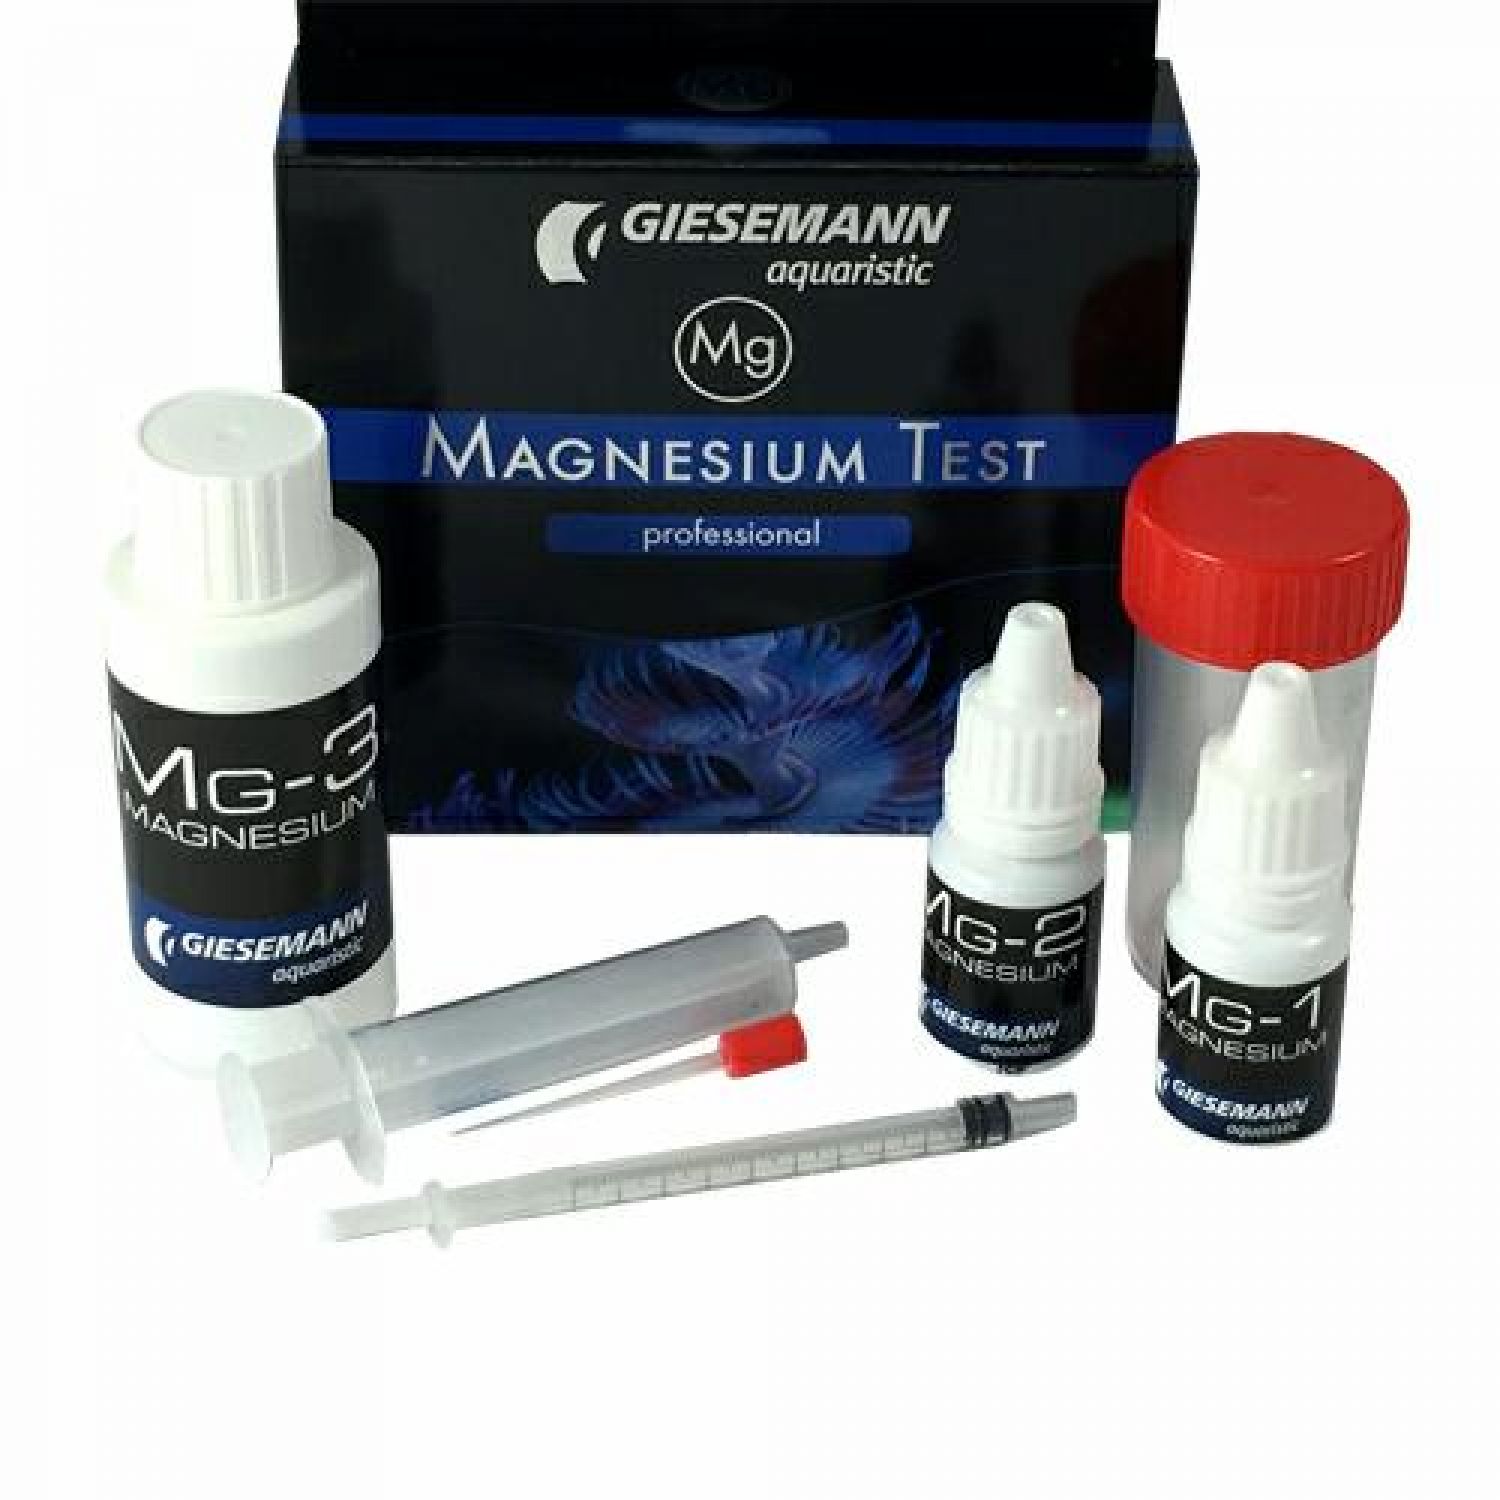 Giesemann marine professional Test kit für Mg - Magnesium